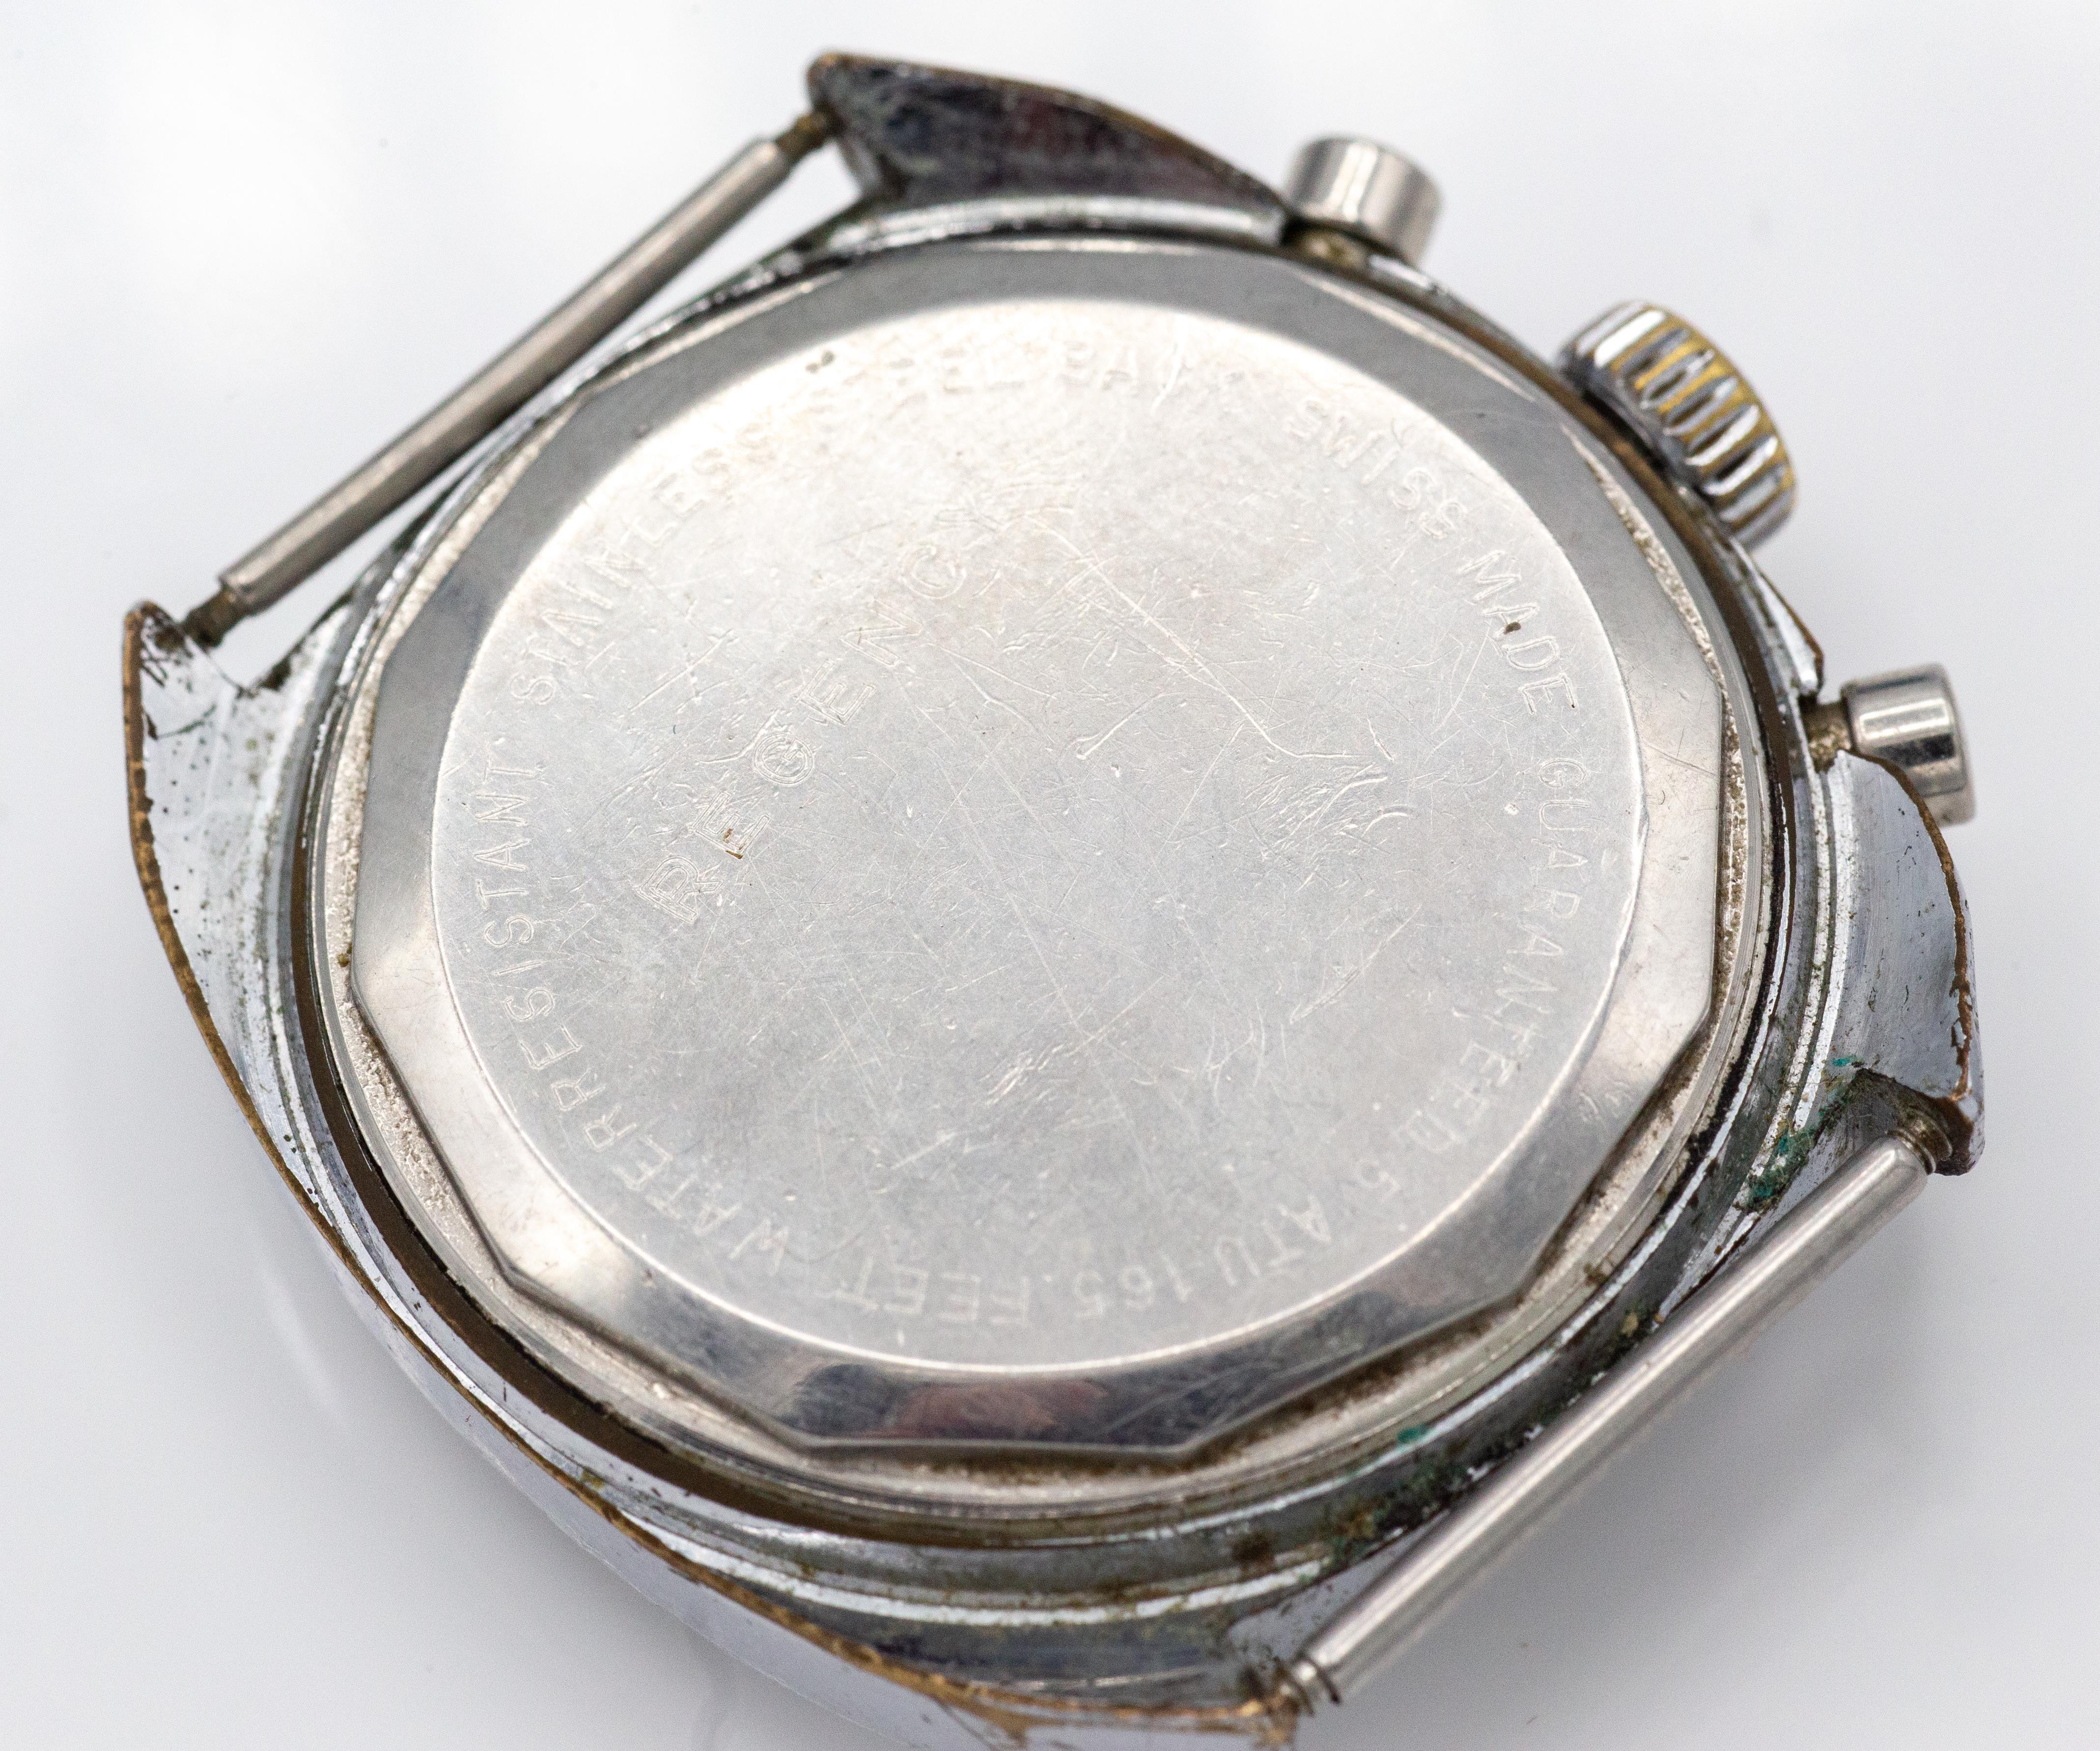 Mid Century Regency 17 Jewels Incabloc Chronograph Watch - Image 2 of 2